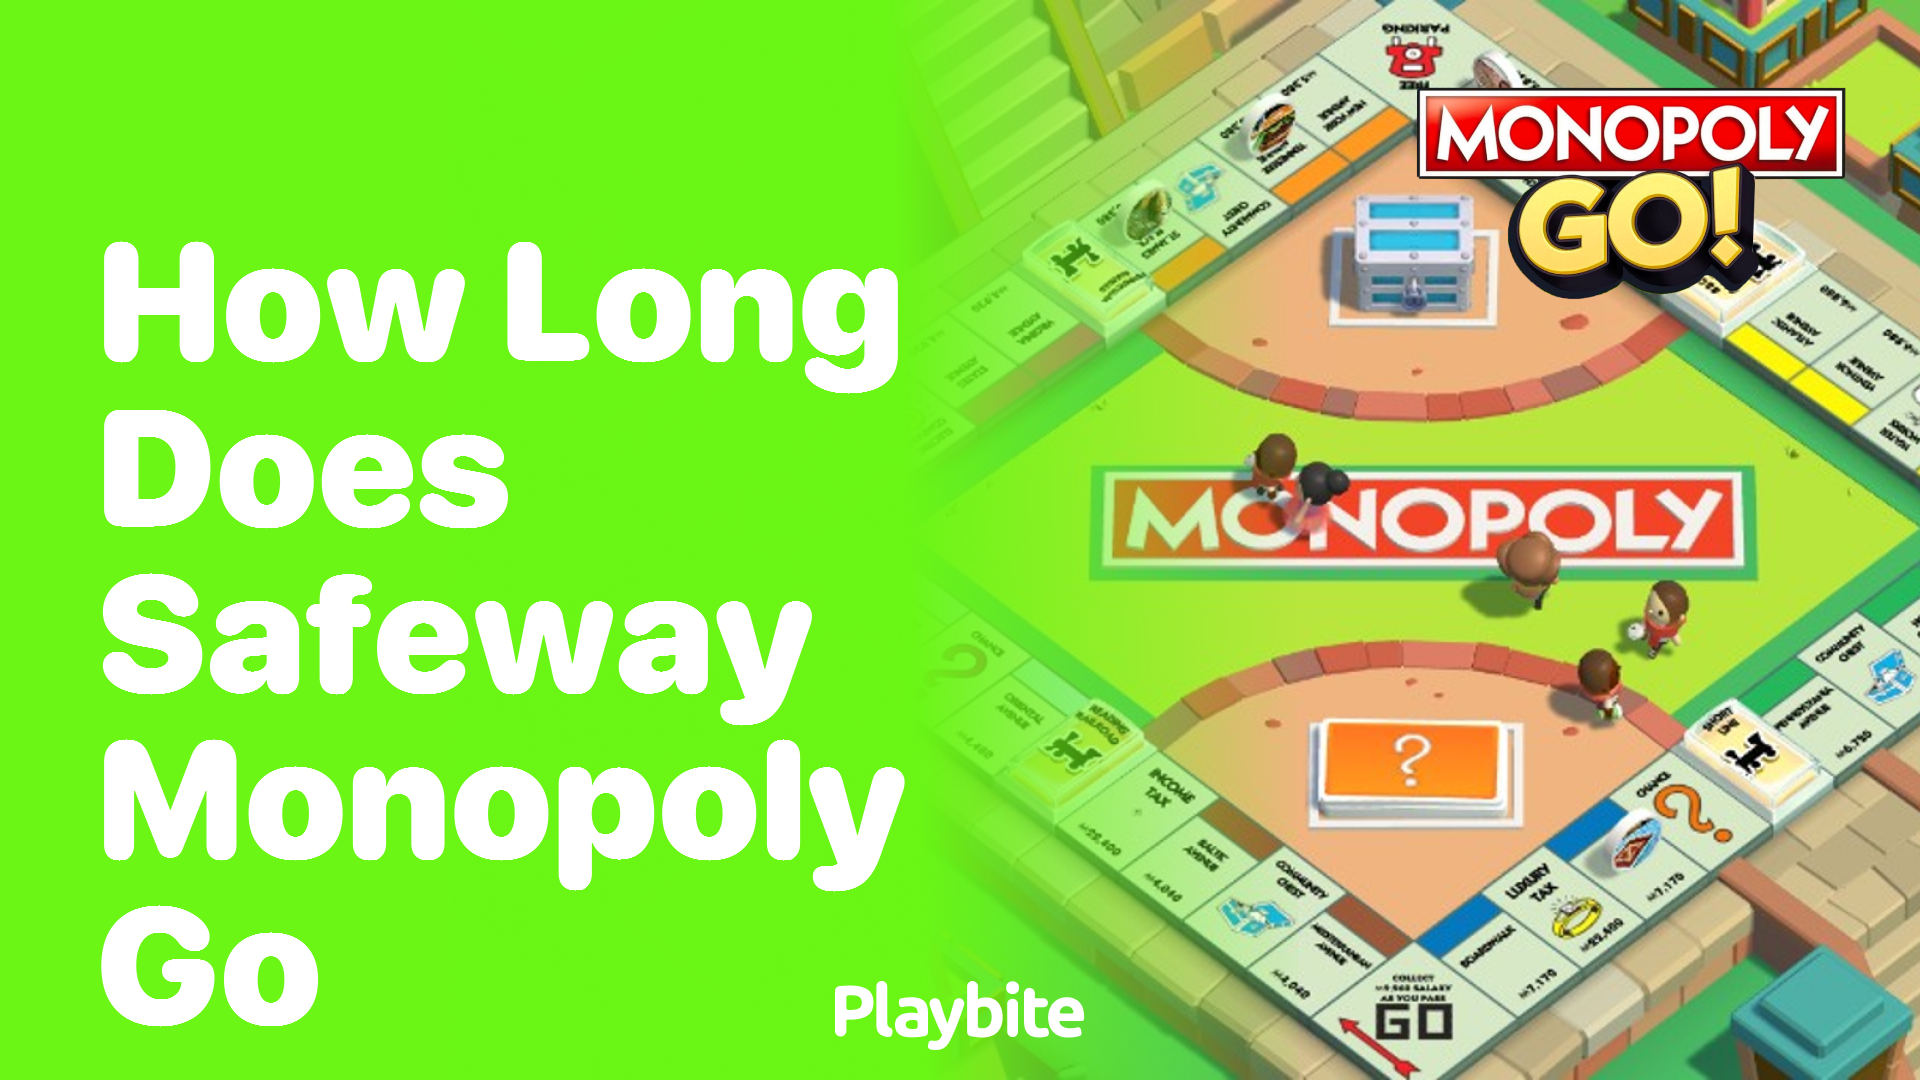 How Long Does Safeway Monopoly Go Last?